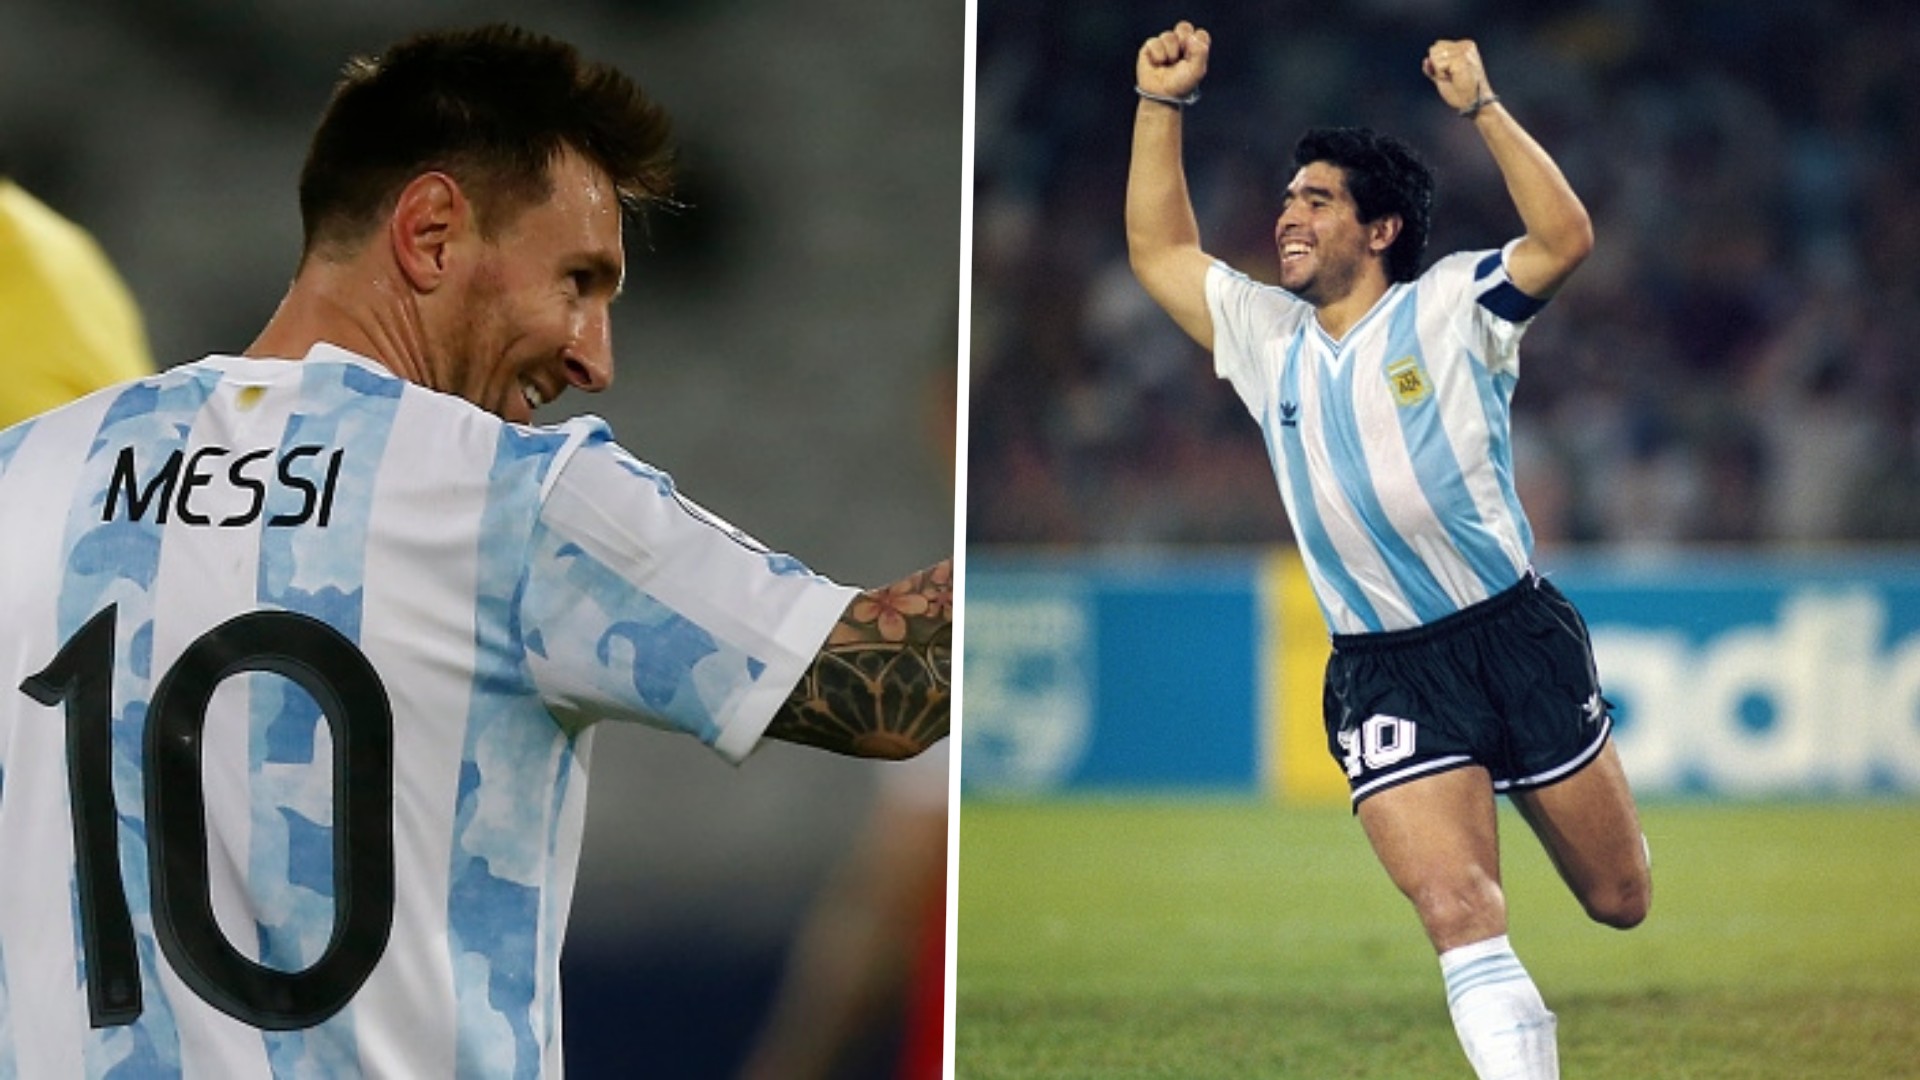 Lionel Messi four goals short of Diego Maradona's free-kick record